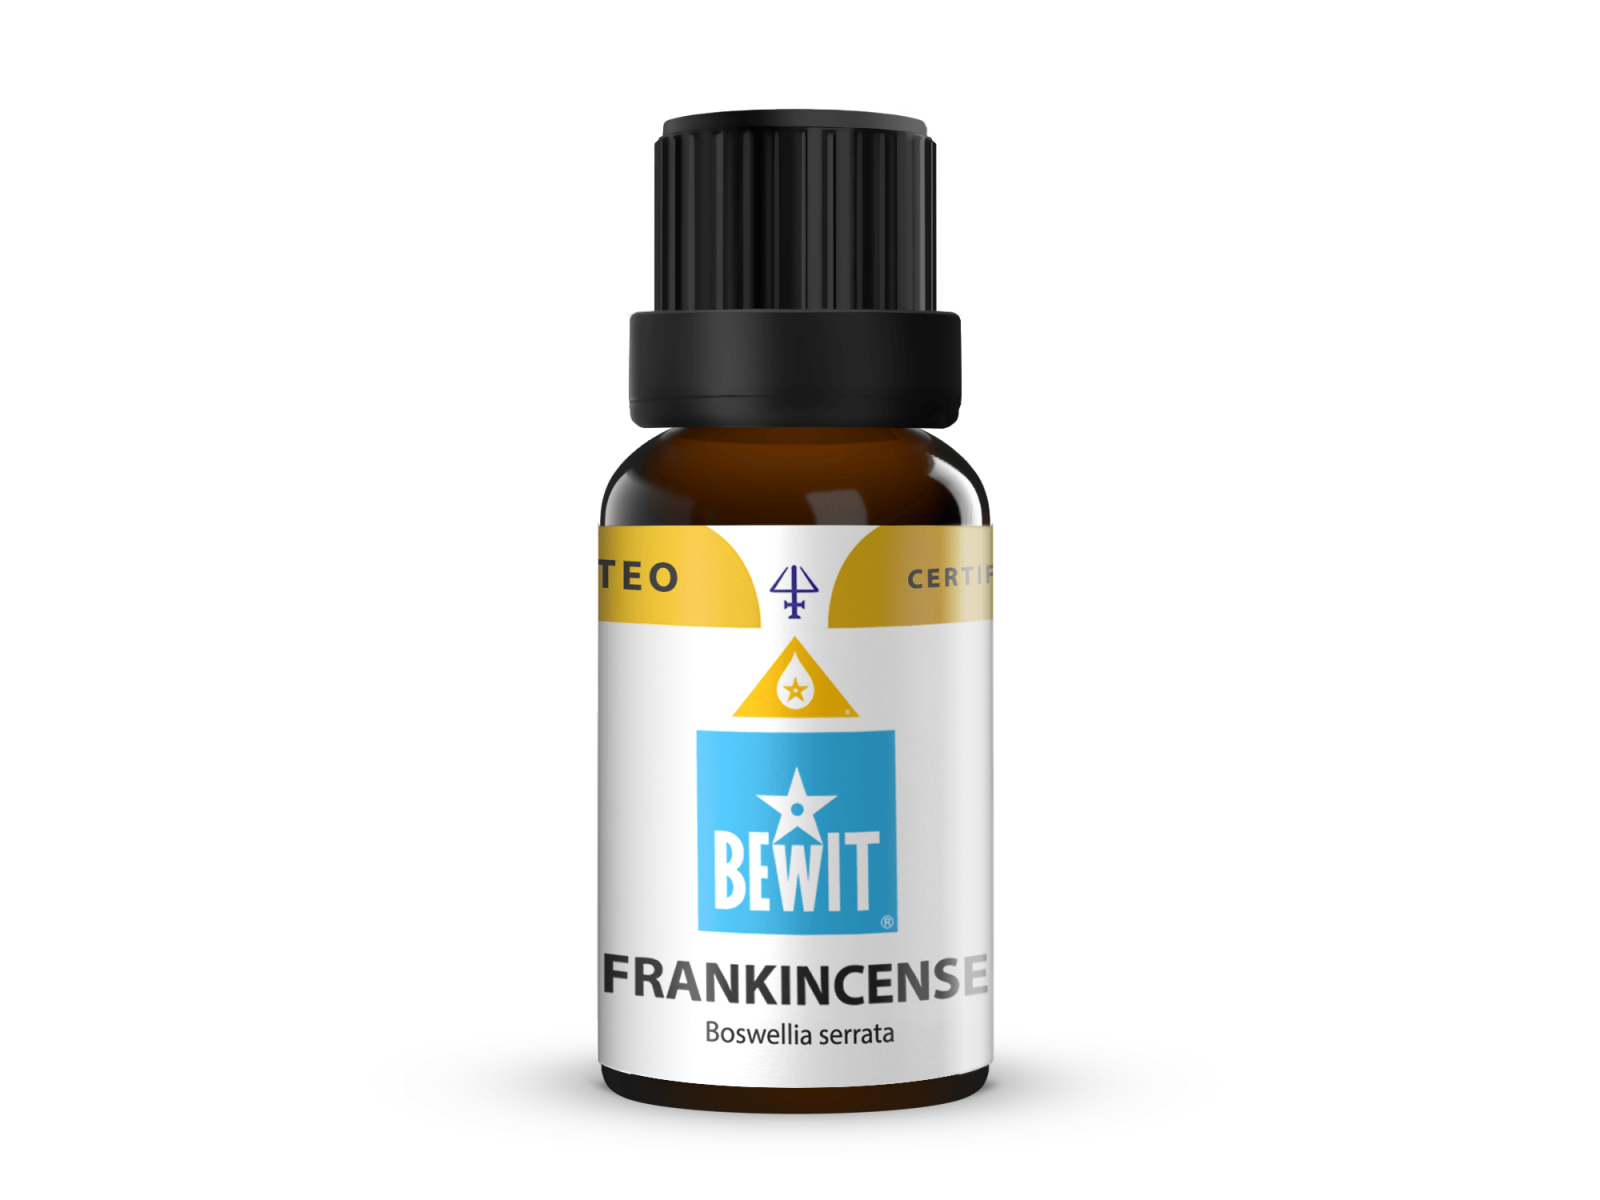 BEWIT Frankincense Serrata - 100% pure and natural essential oil